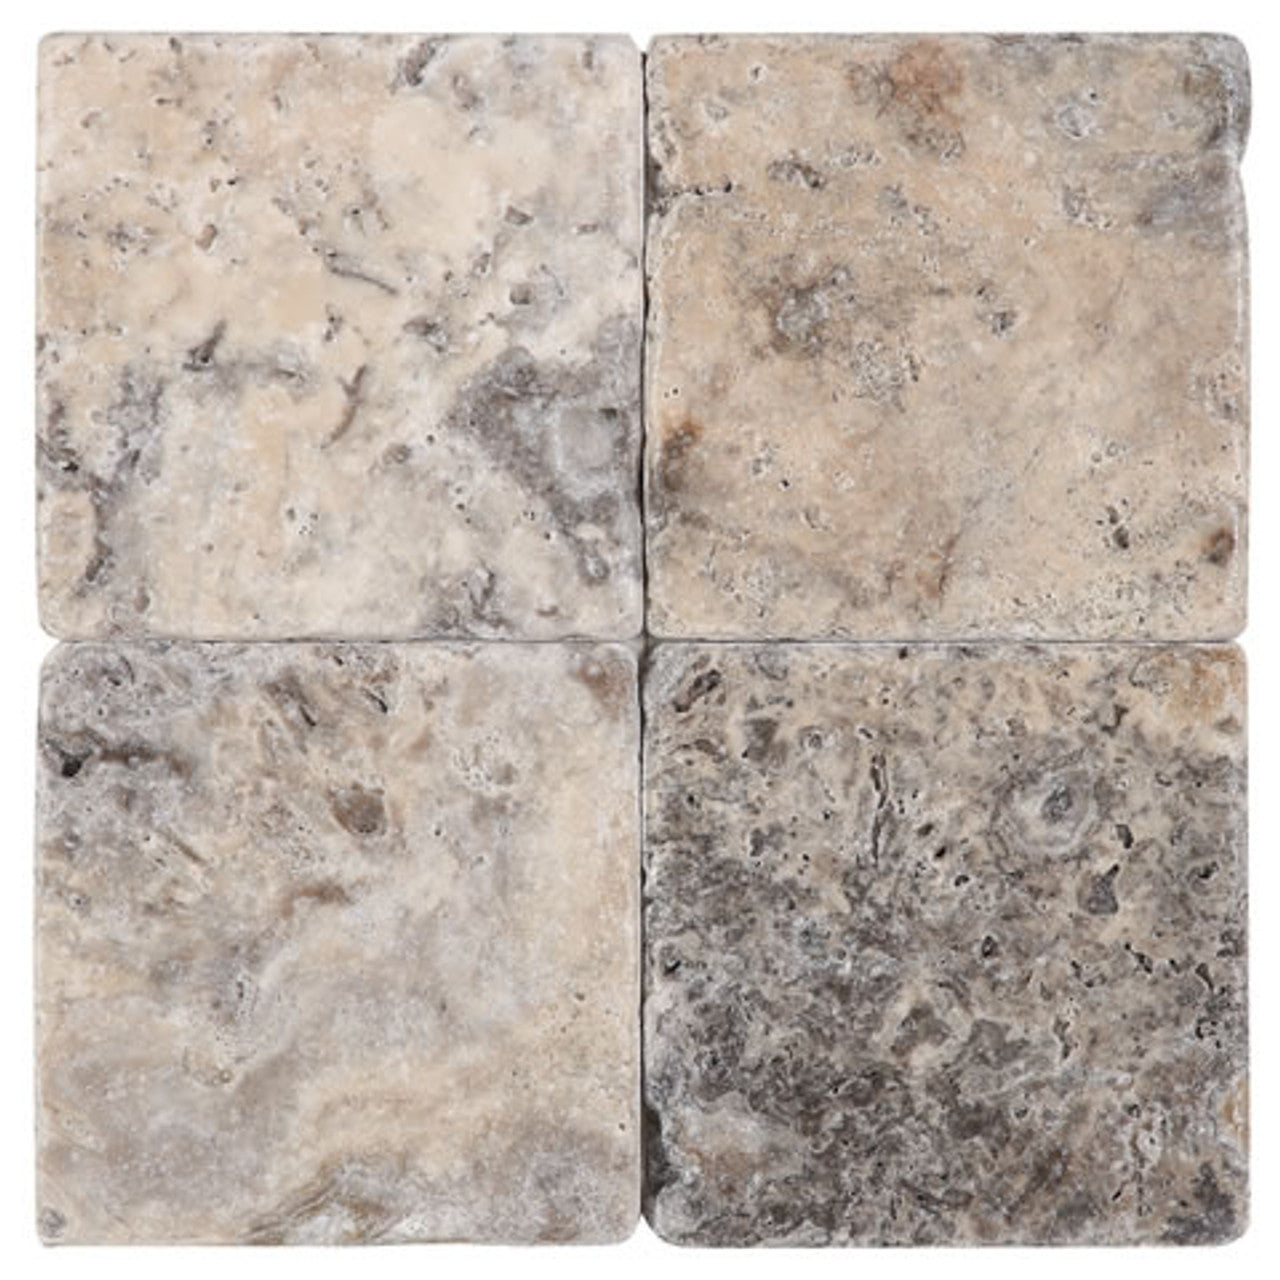 Tenedos 4x4 Silver Philadelphia Tumbled Travertine Natural Stone Wall Flooring Tile (Box of 5 sq.ft/45 pieces)